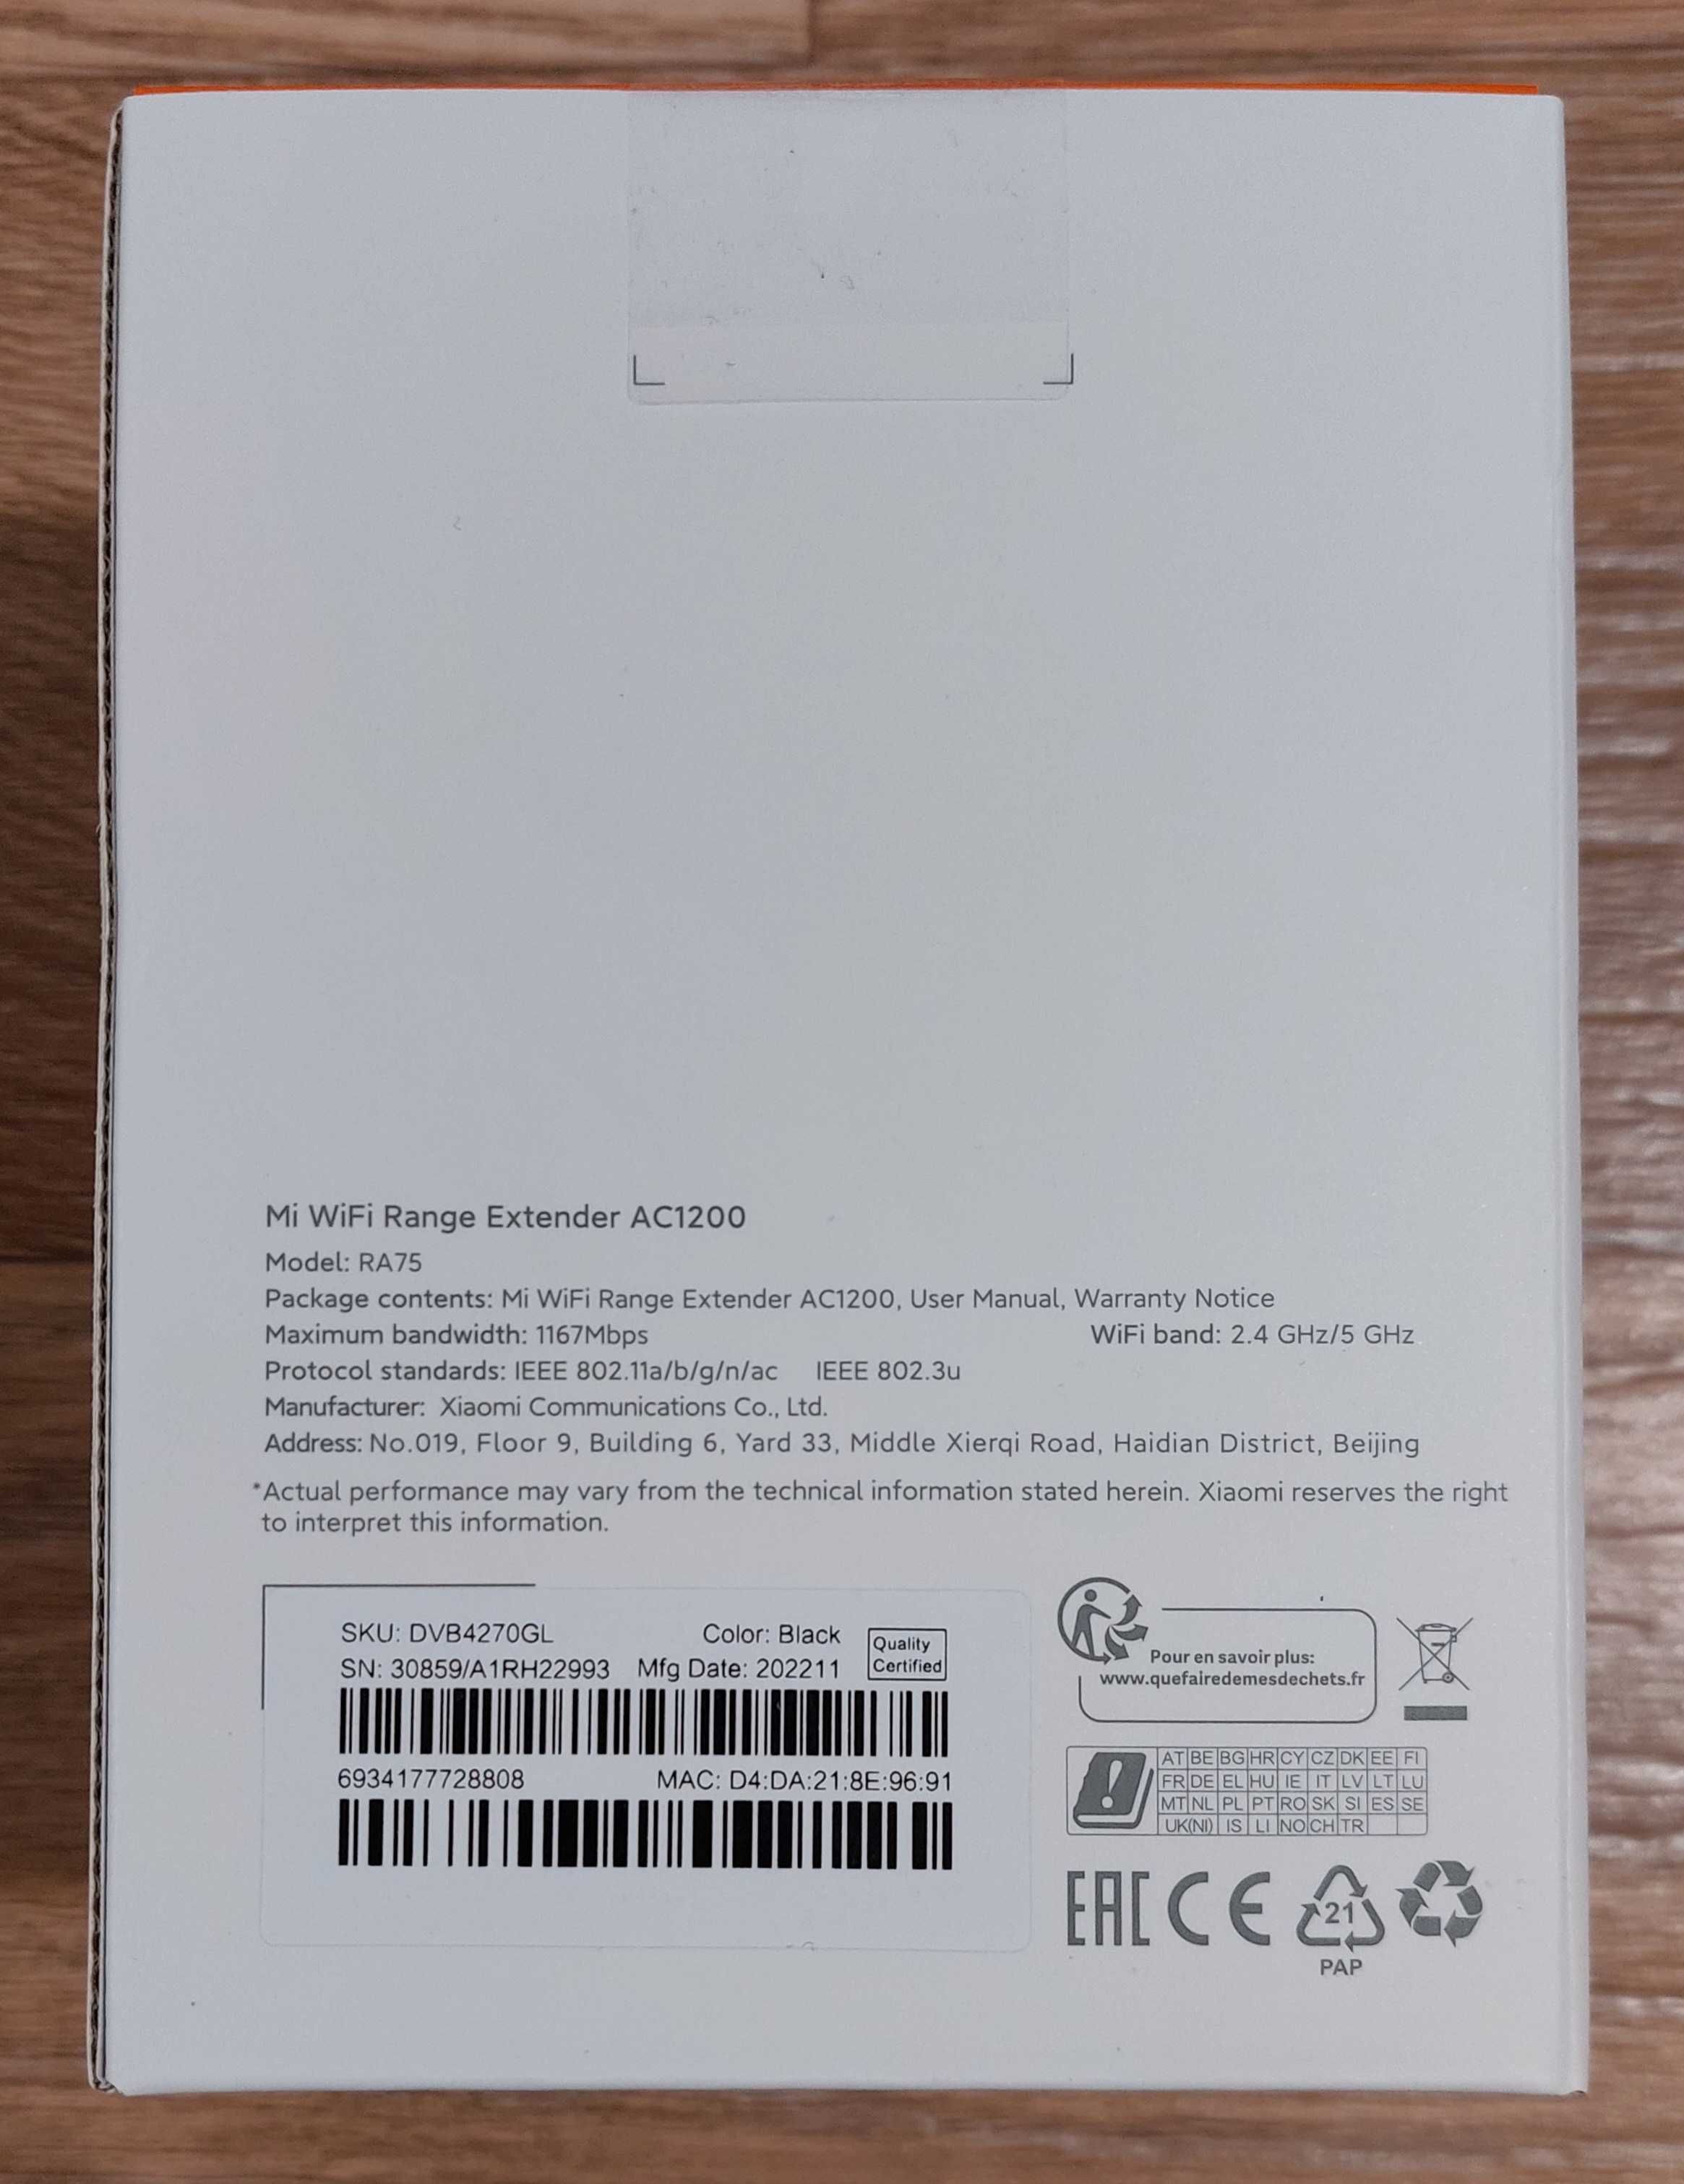 (НОВЫЙ) WI-FI Репитер Xiaomi
Mi Range Extender AC1200 Ретранслятор